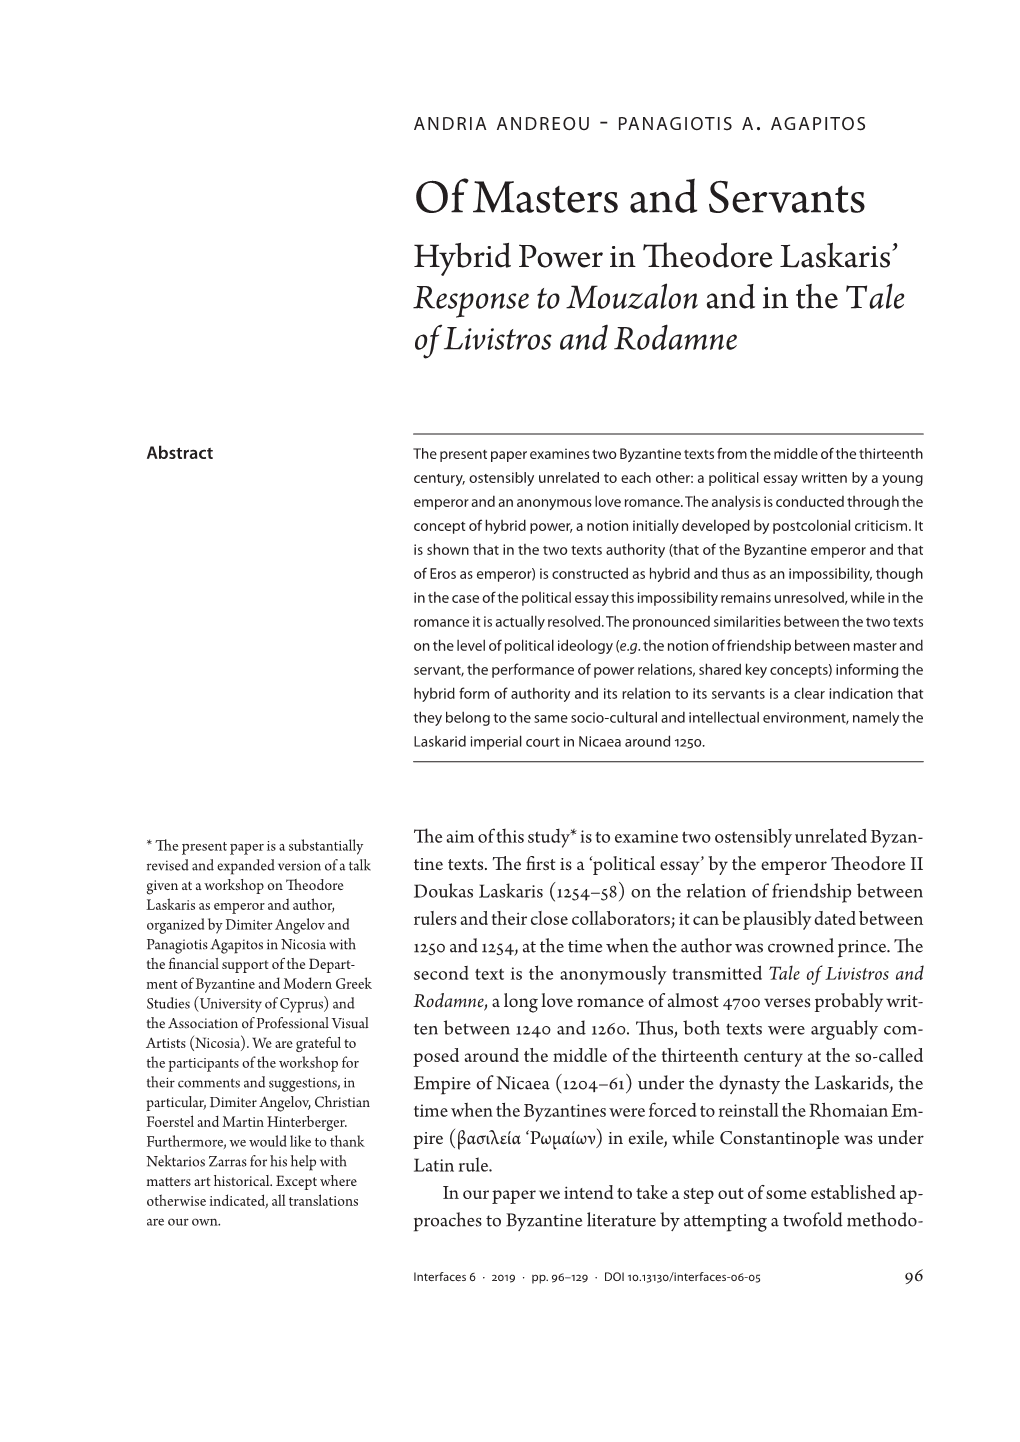 Of Masters and Servants: Hybrid Power in Theodore Laskaris